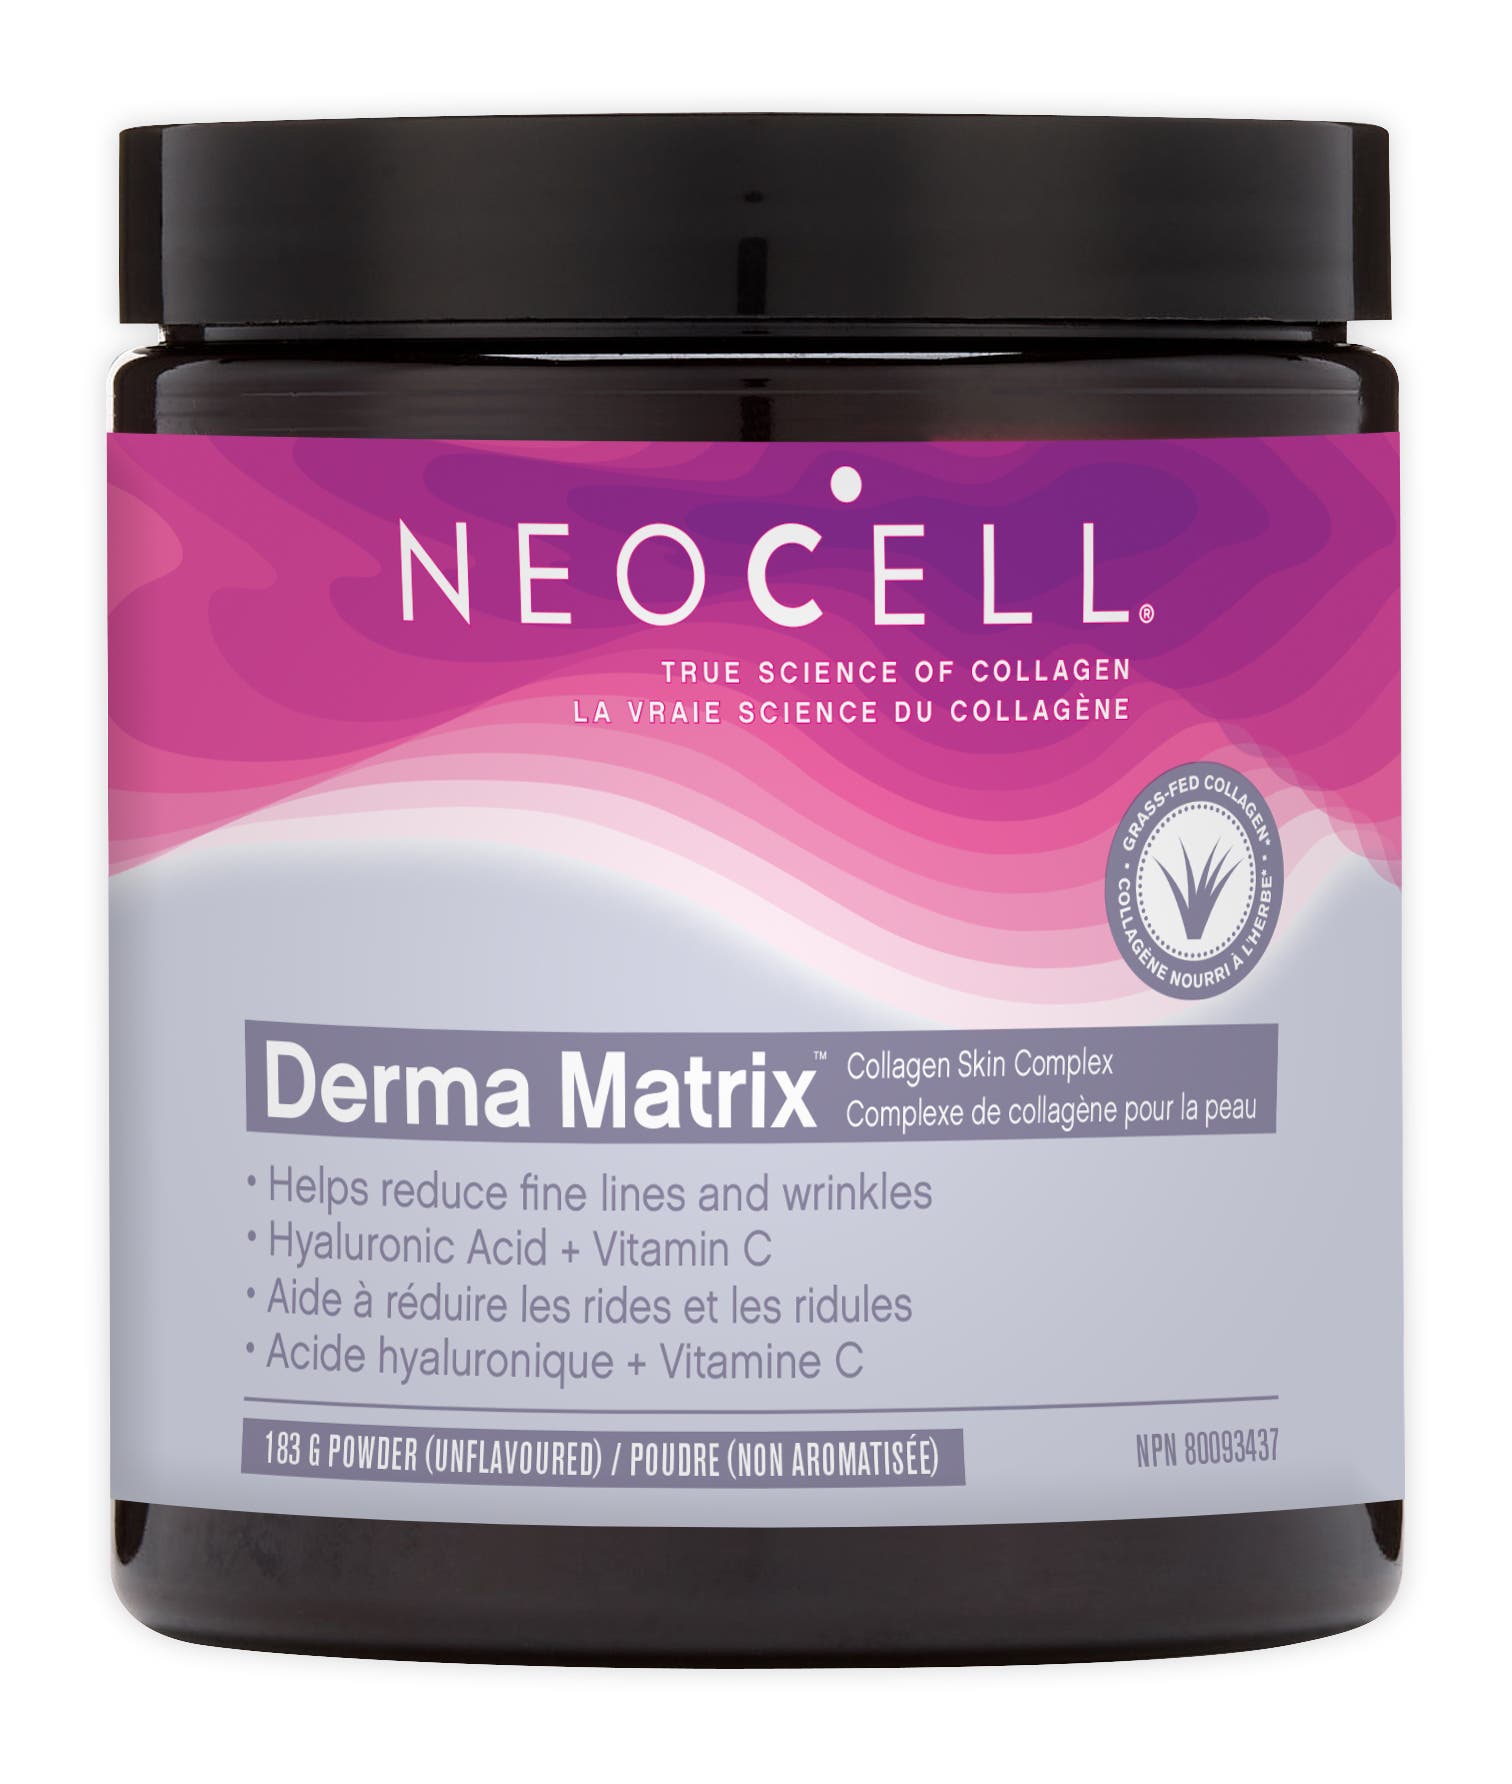 NeoCell Derma Matrix 183g